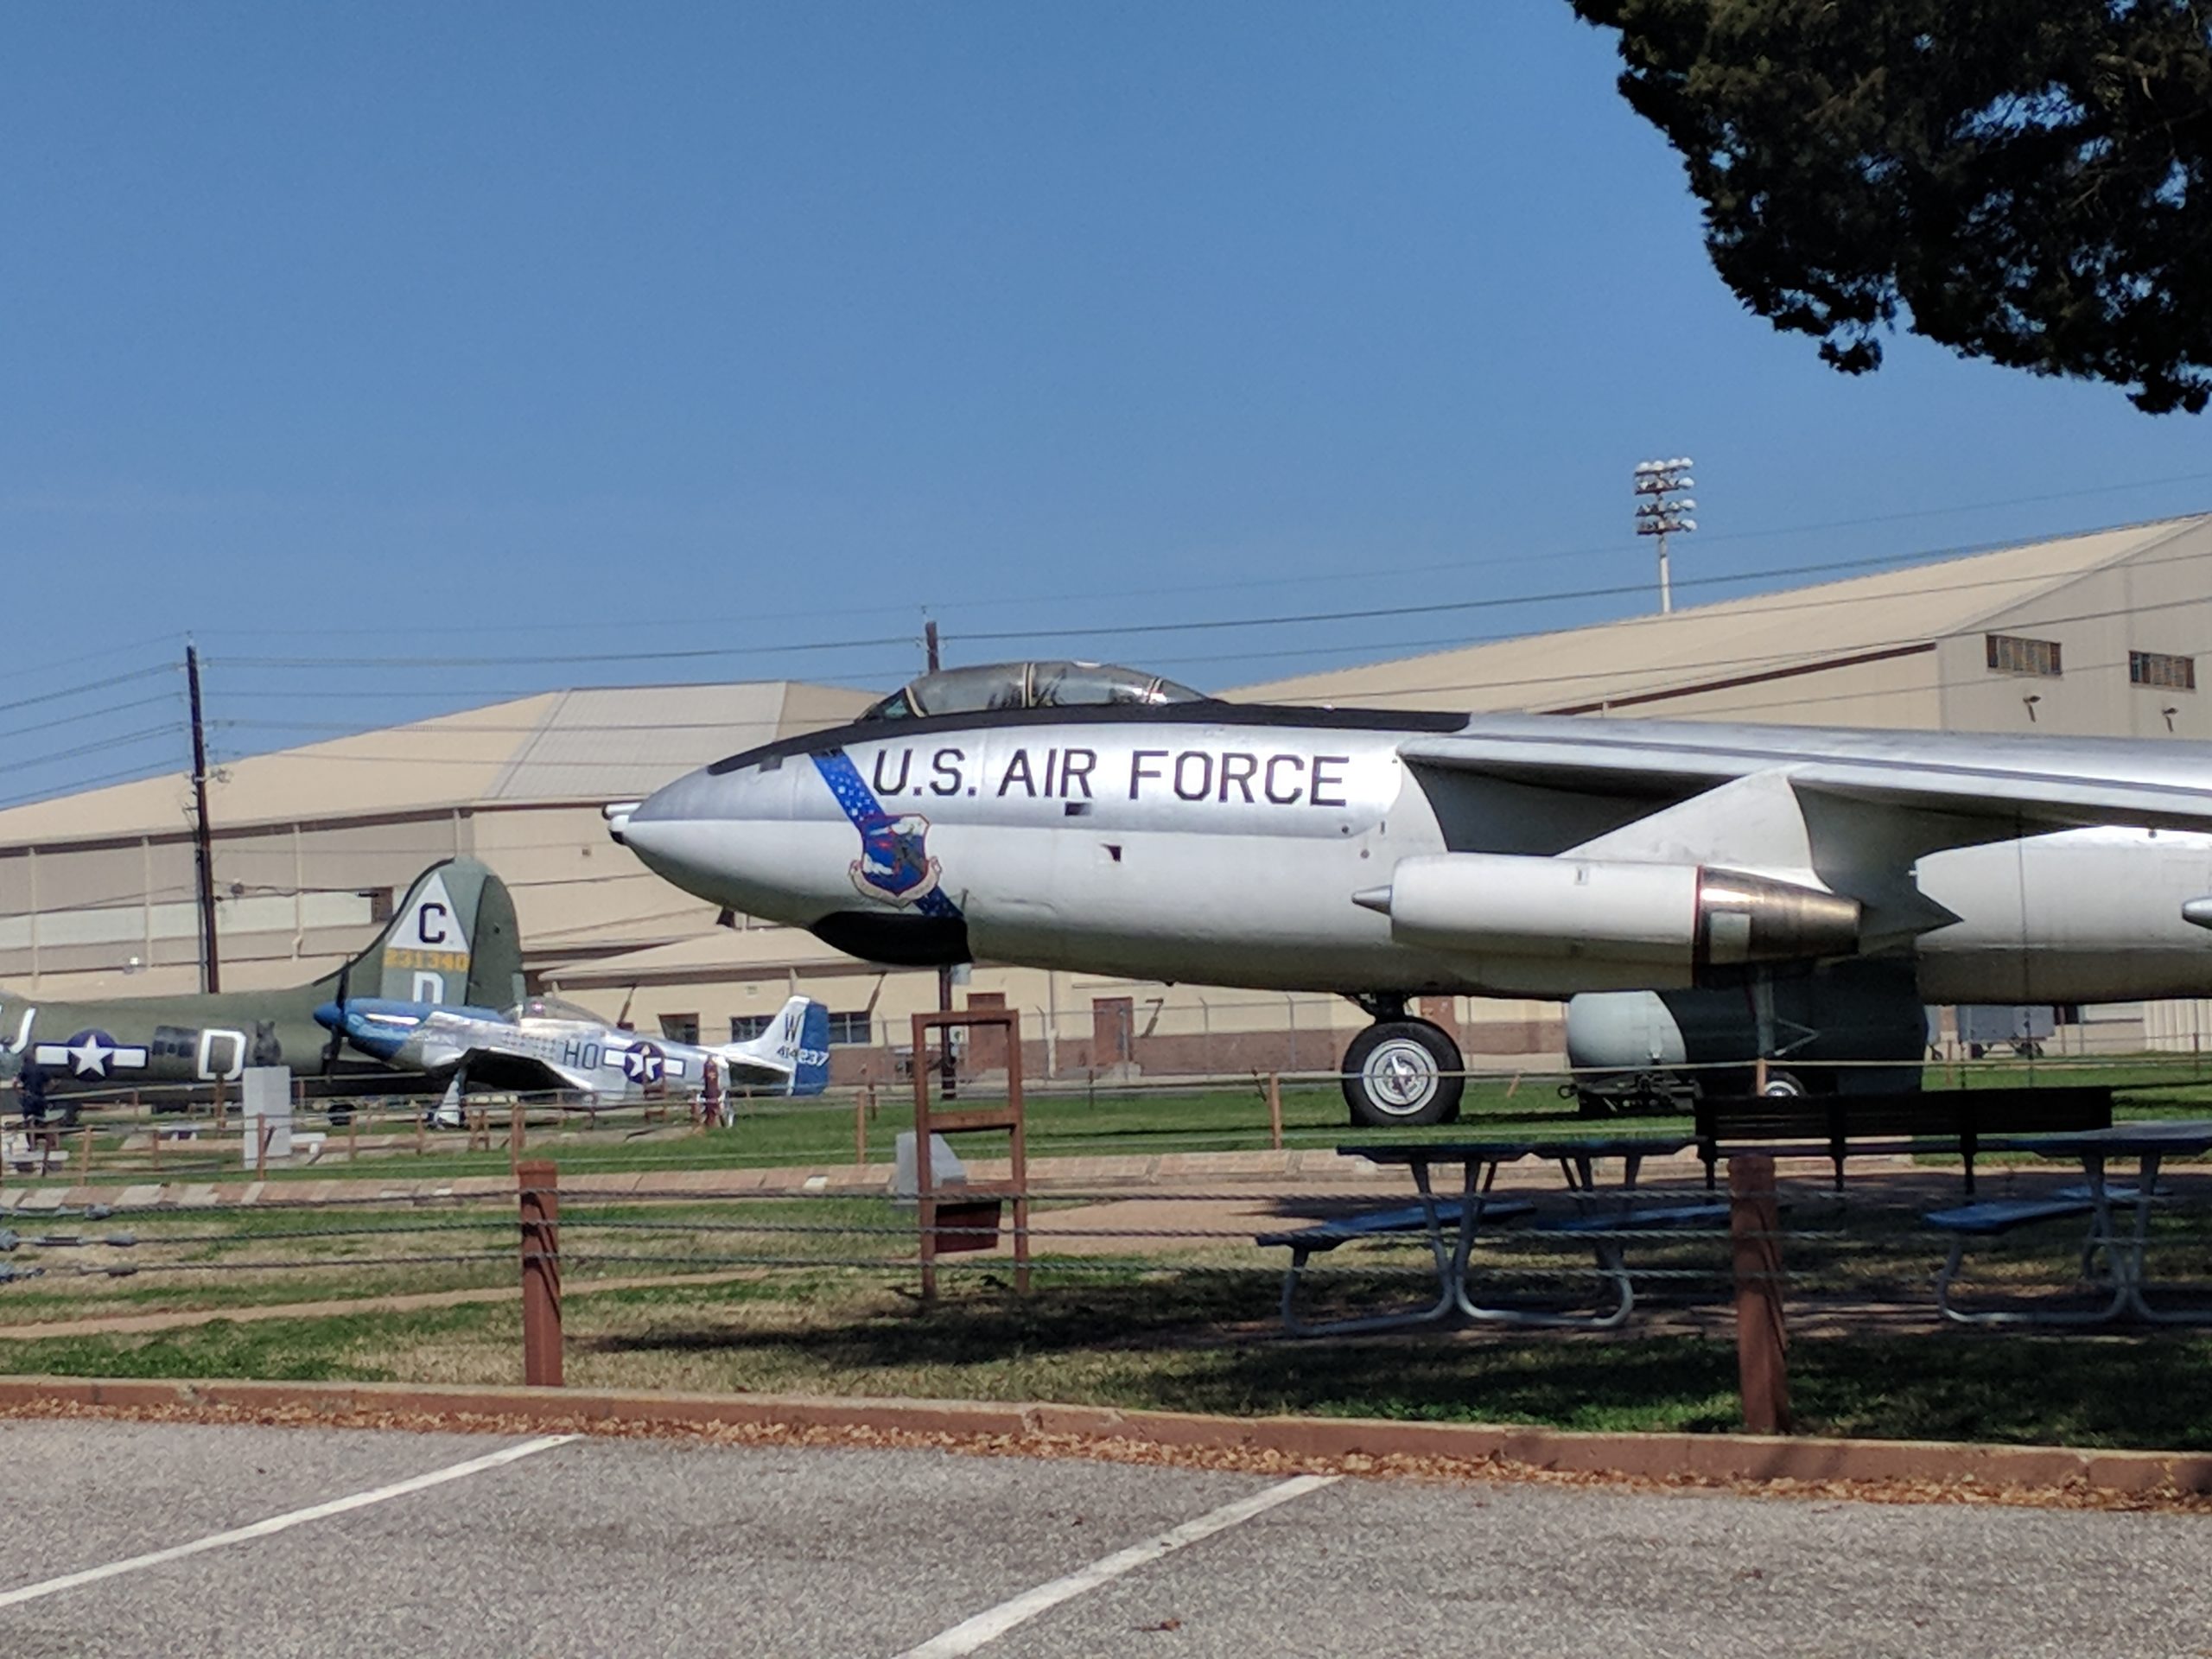 Barksdale Air Force Base